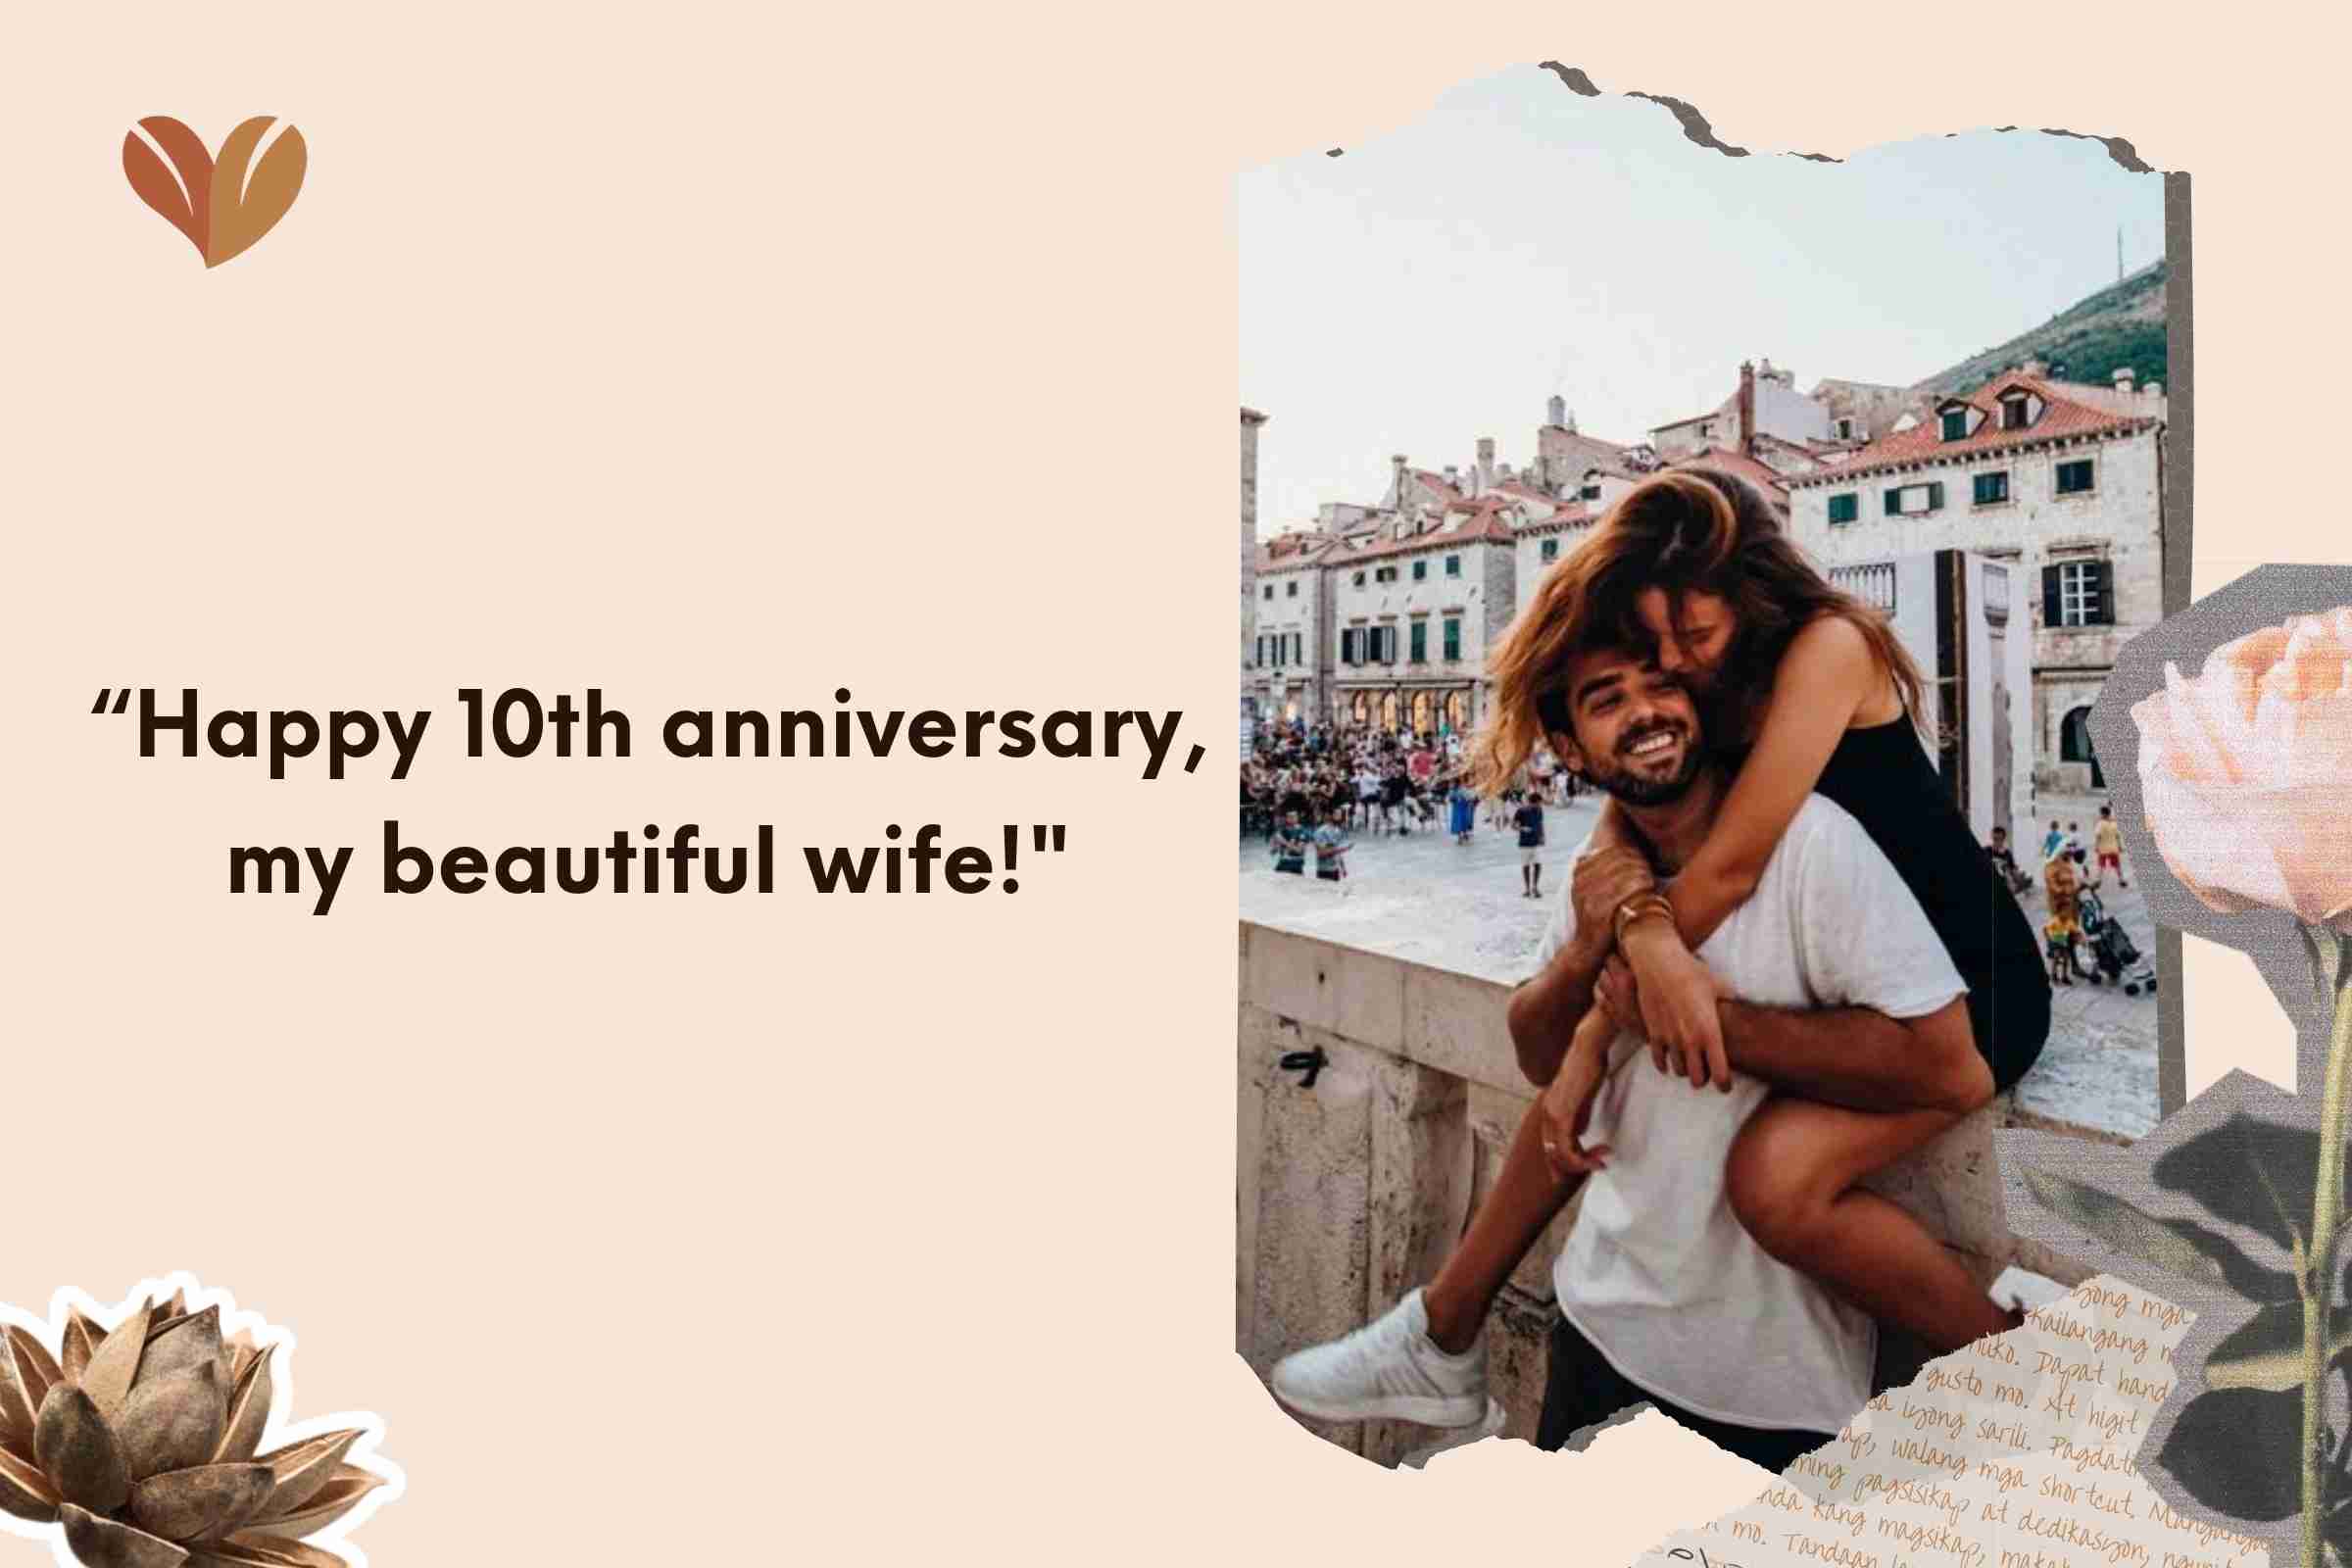 “Happy 10th anniversary, my beautiful wife!"